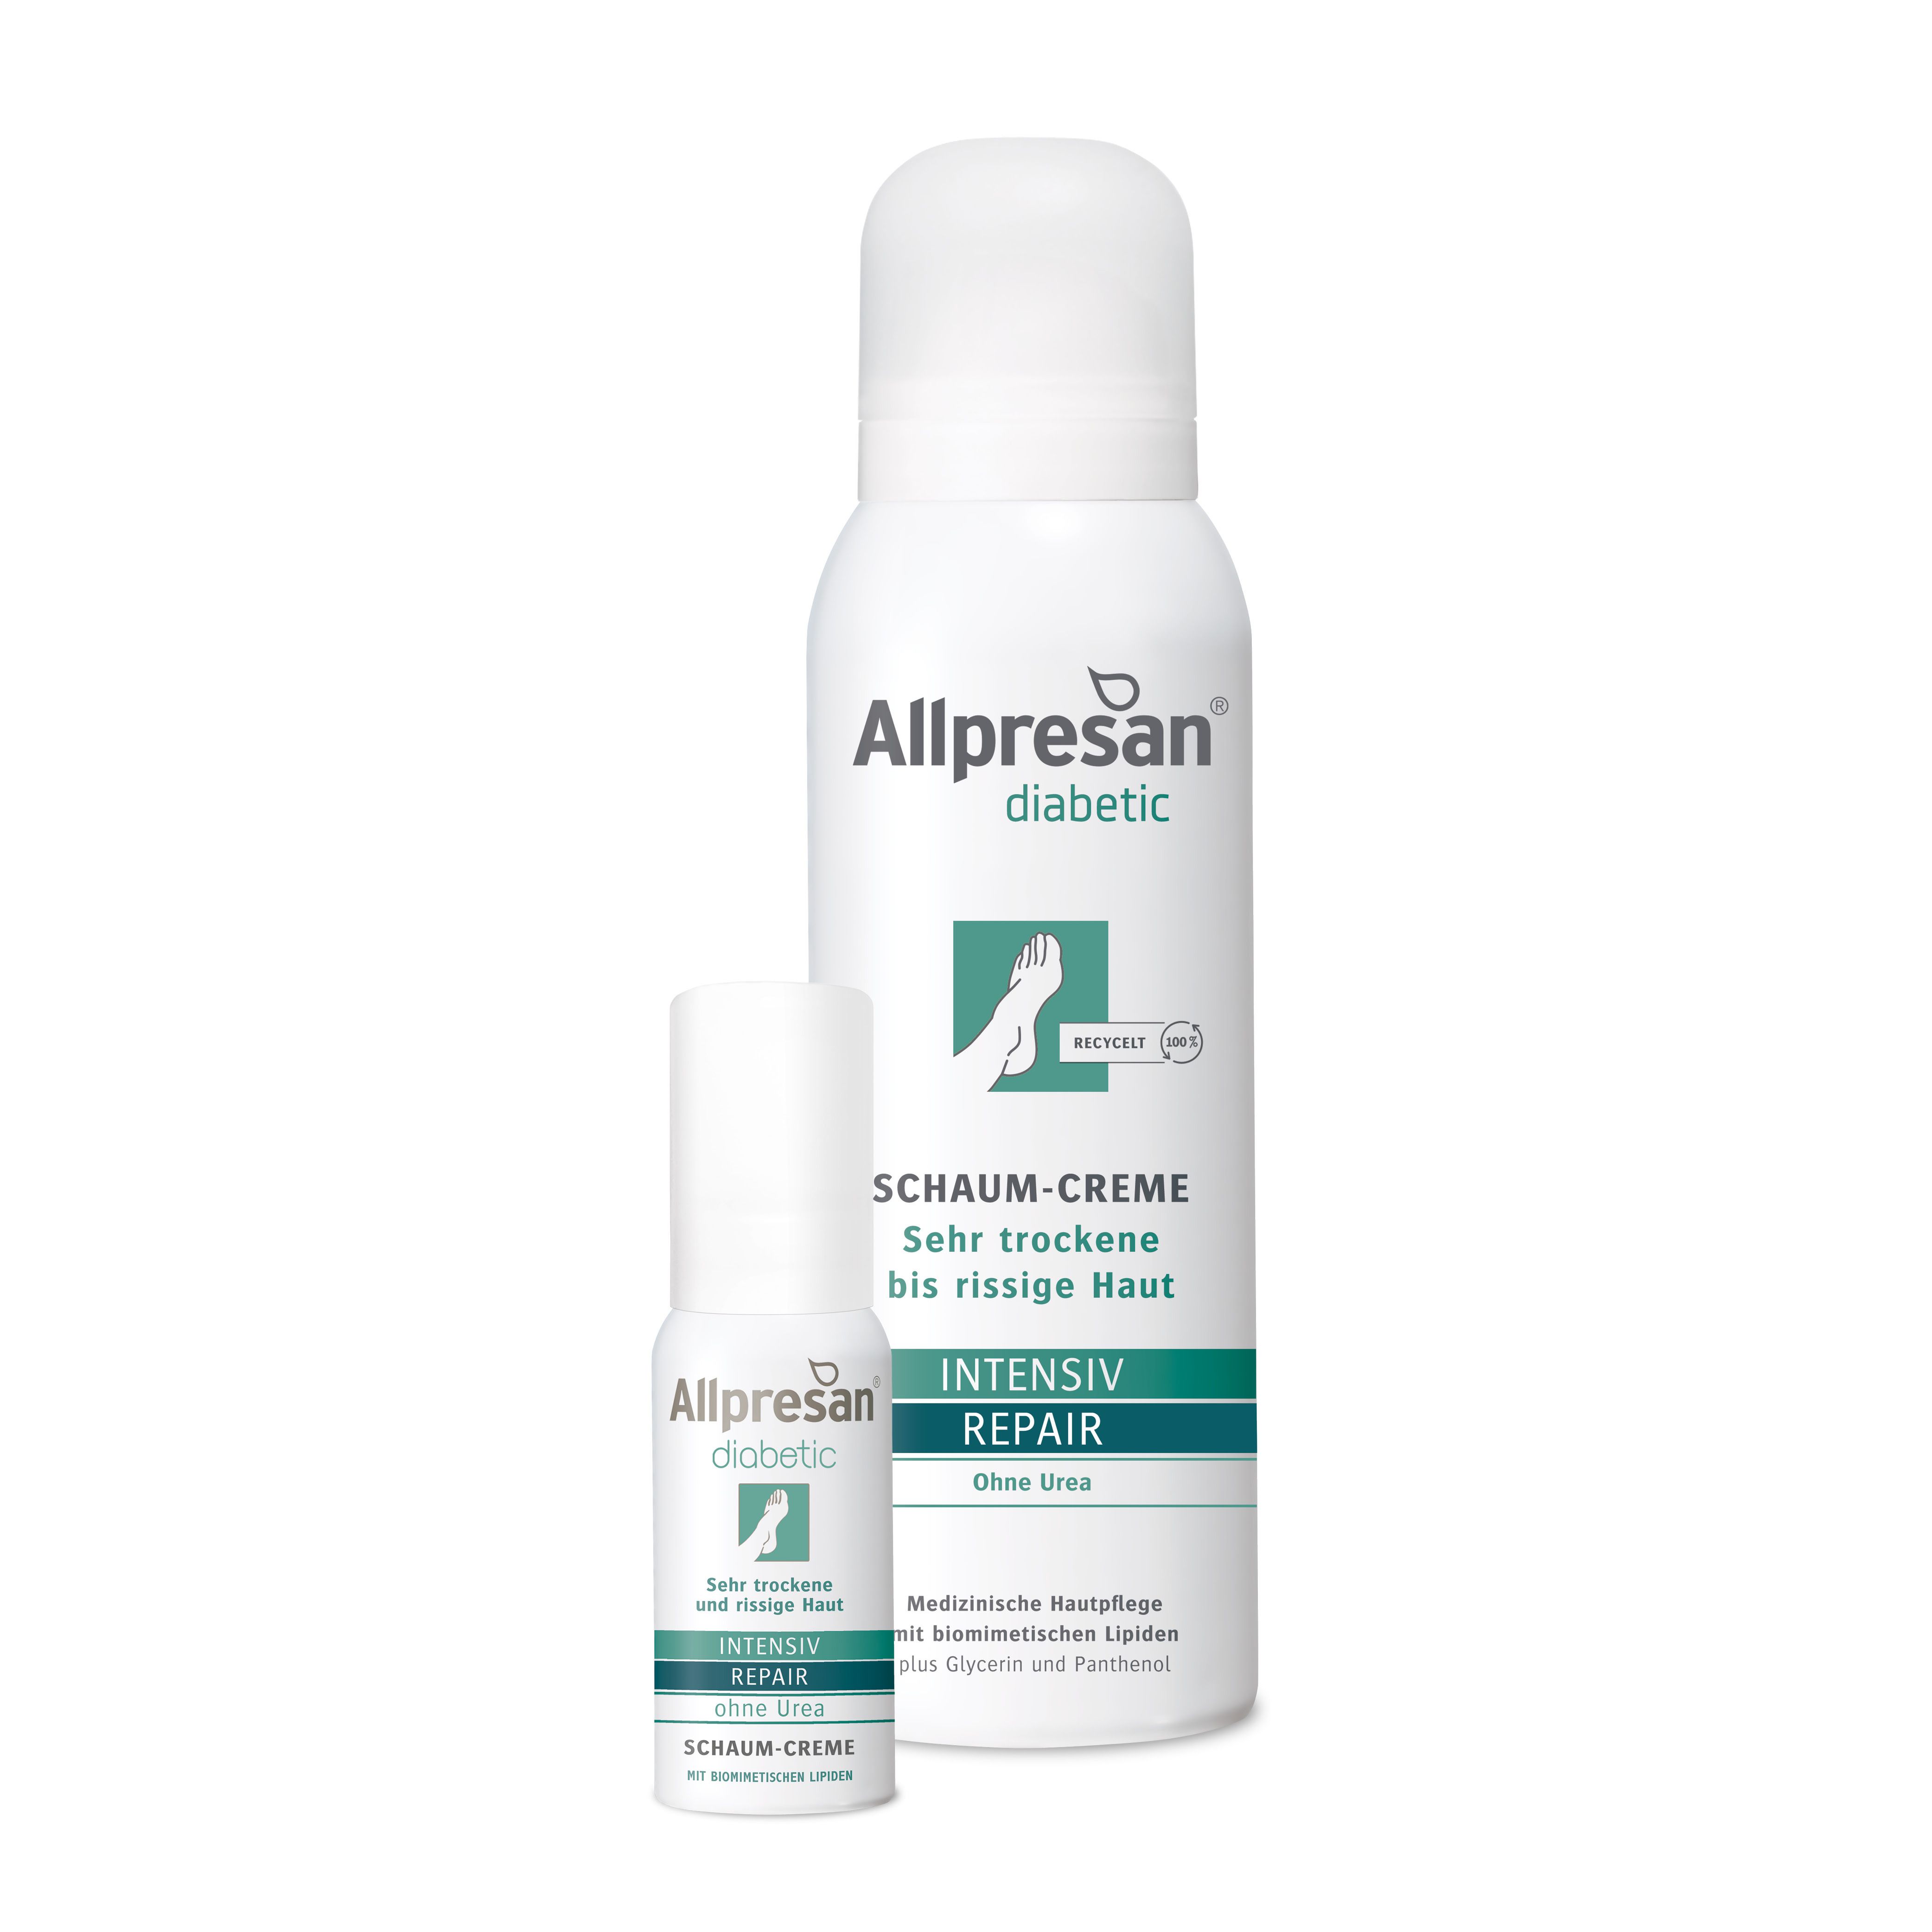 Neubourg Skin Care GmbH Allpresan® diabetic Intensiv Repair Schaum-Creme ohne Urea